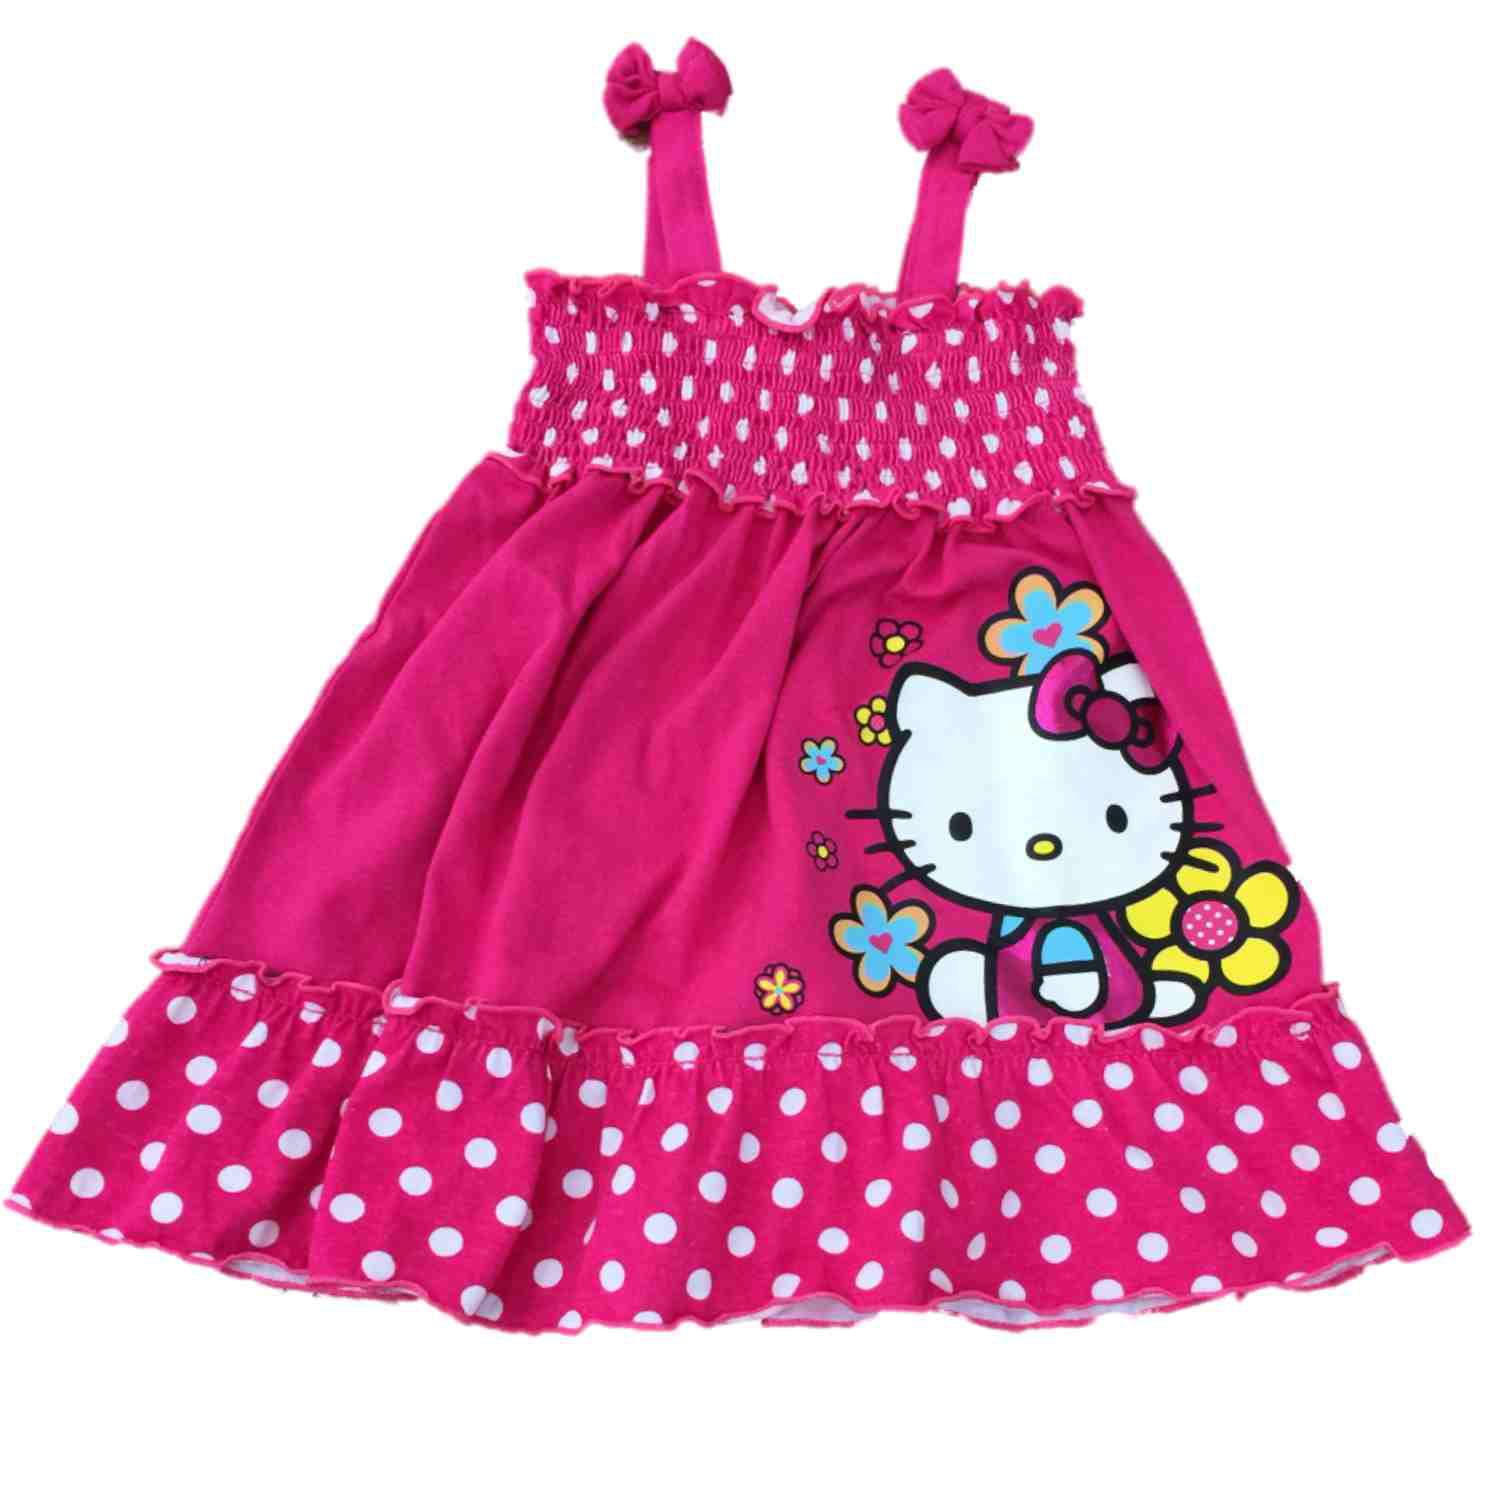  Hello  Kitty  Infant Toddler  Girls Hello  Kitty  Pink 